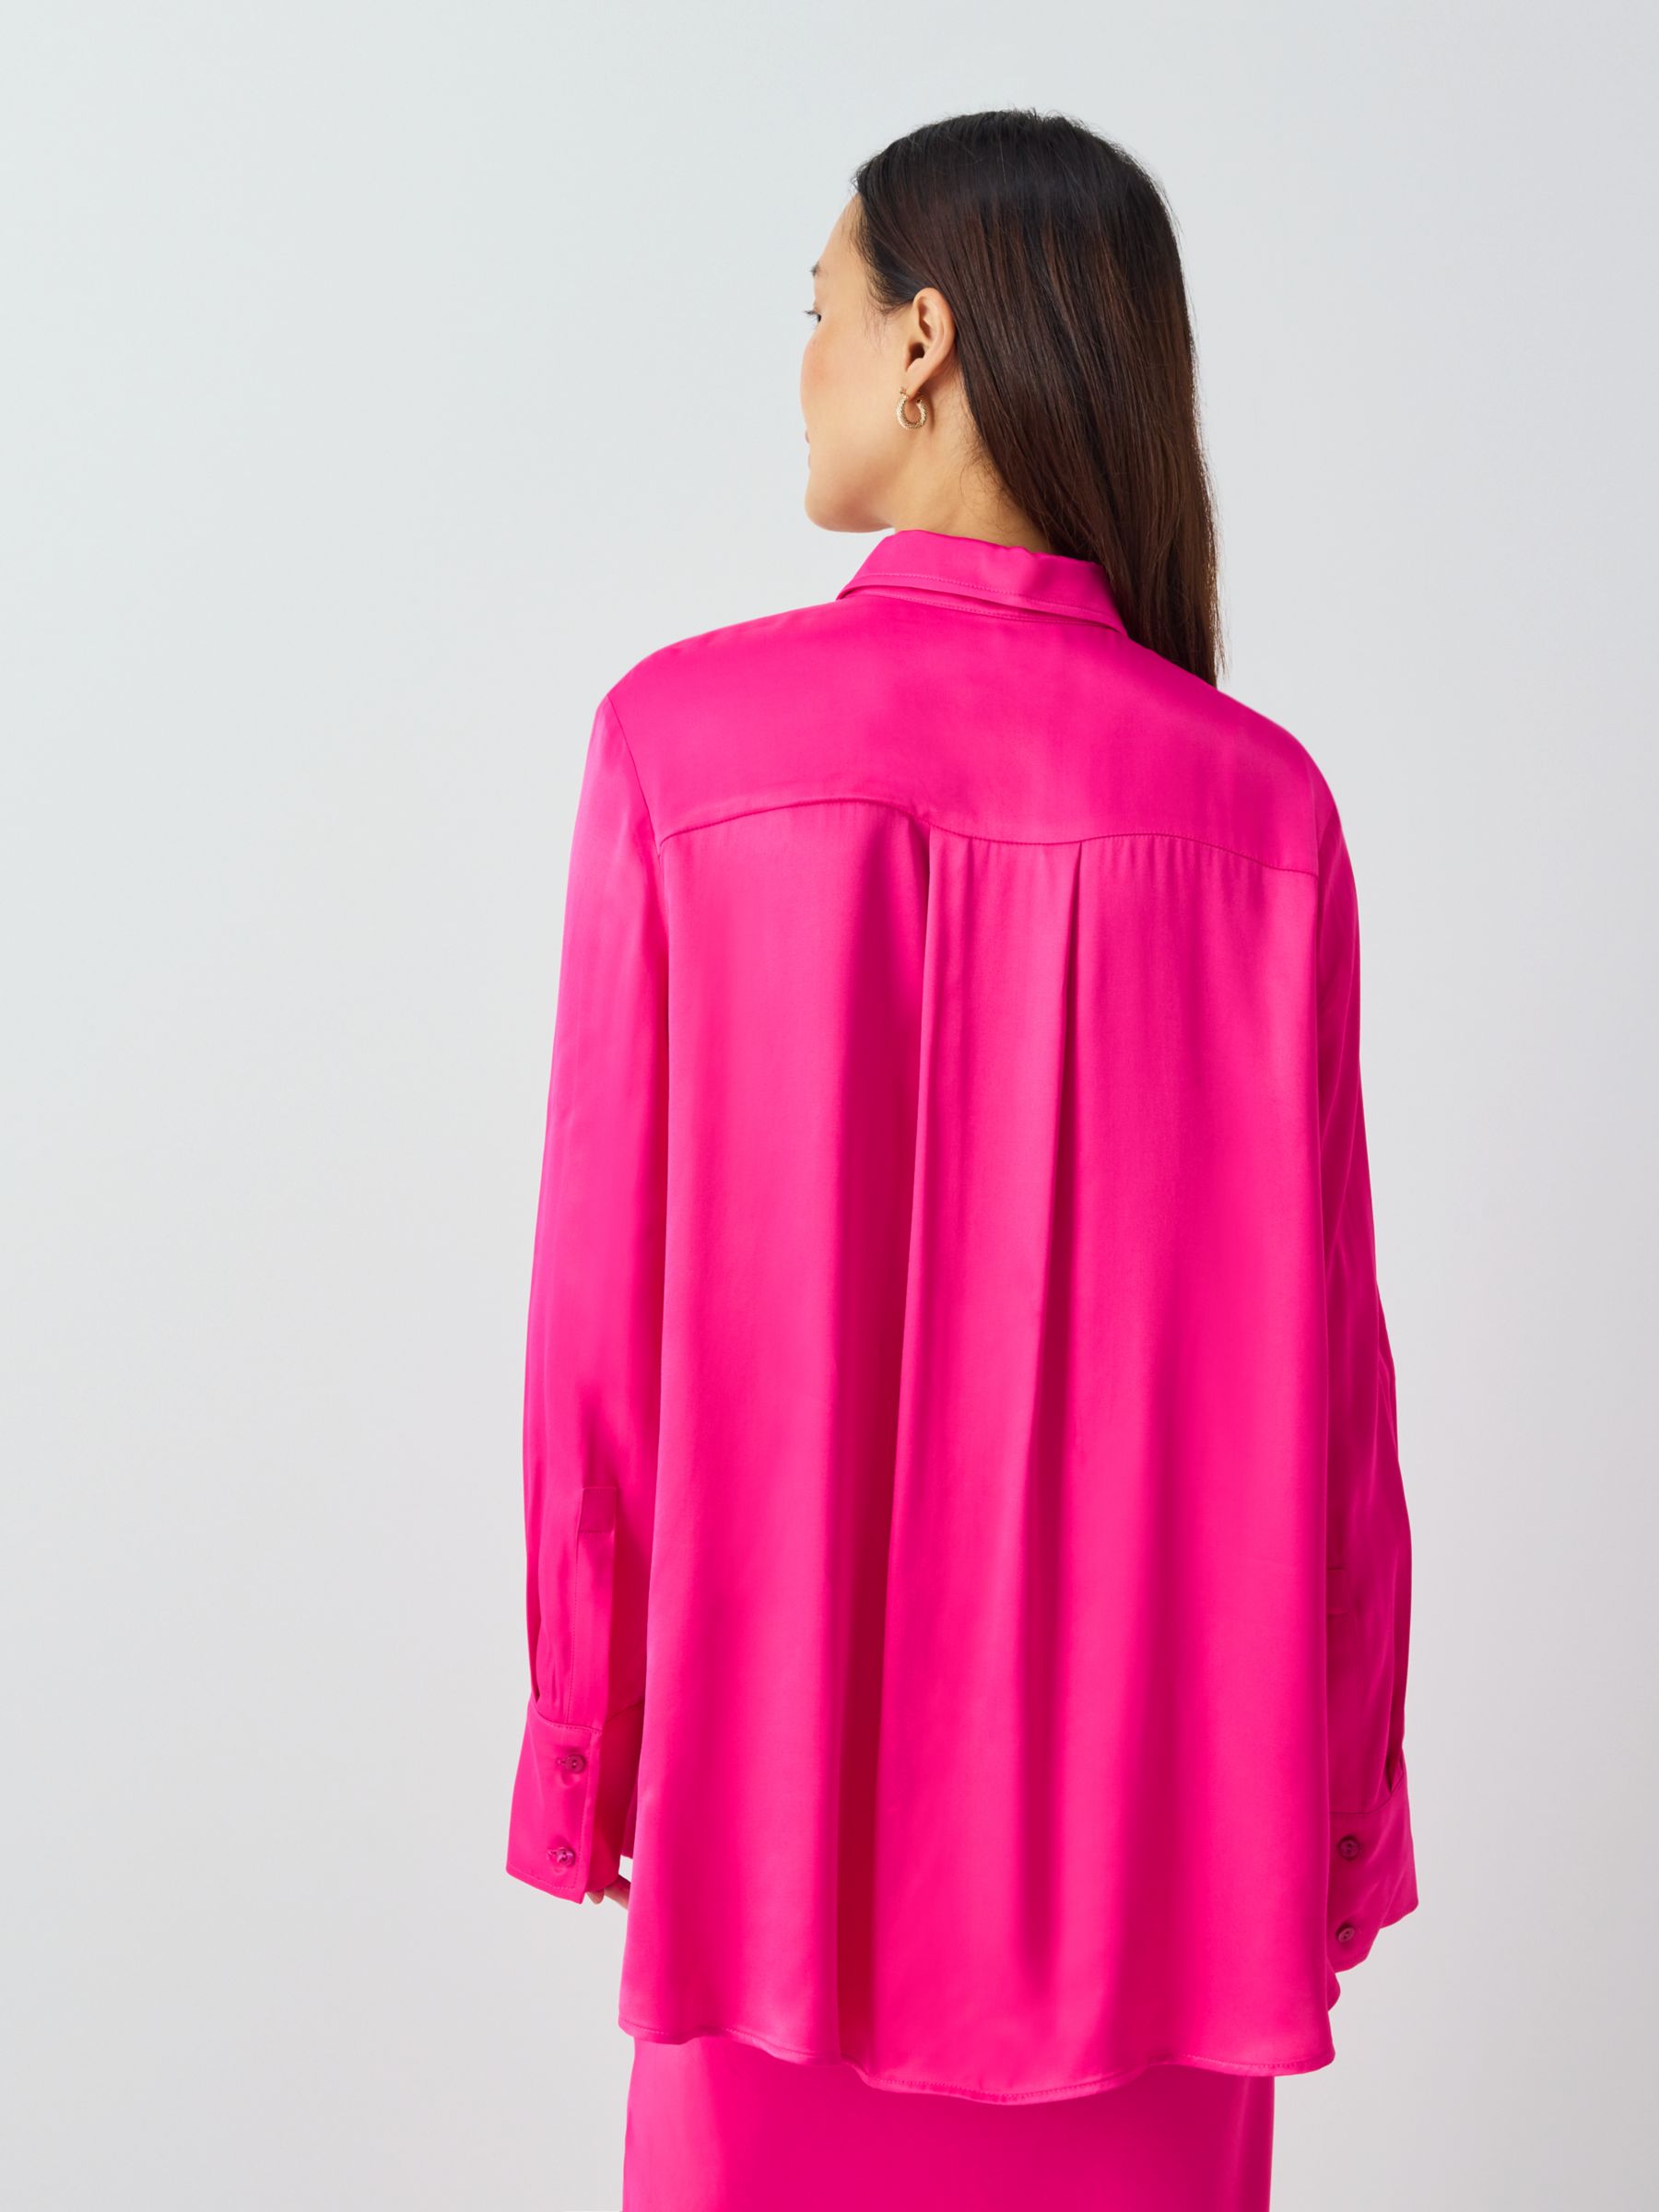 Pink Satin Kyle Cami Top - Women's Fashion - By Vivere – vivere-london